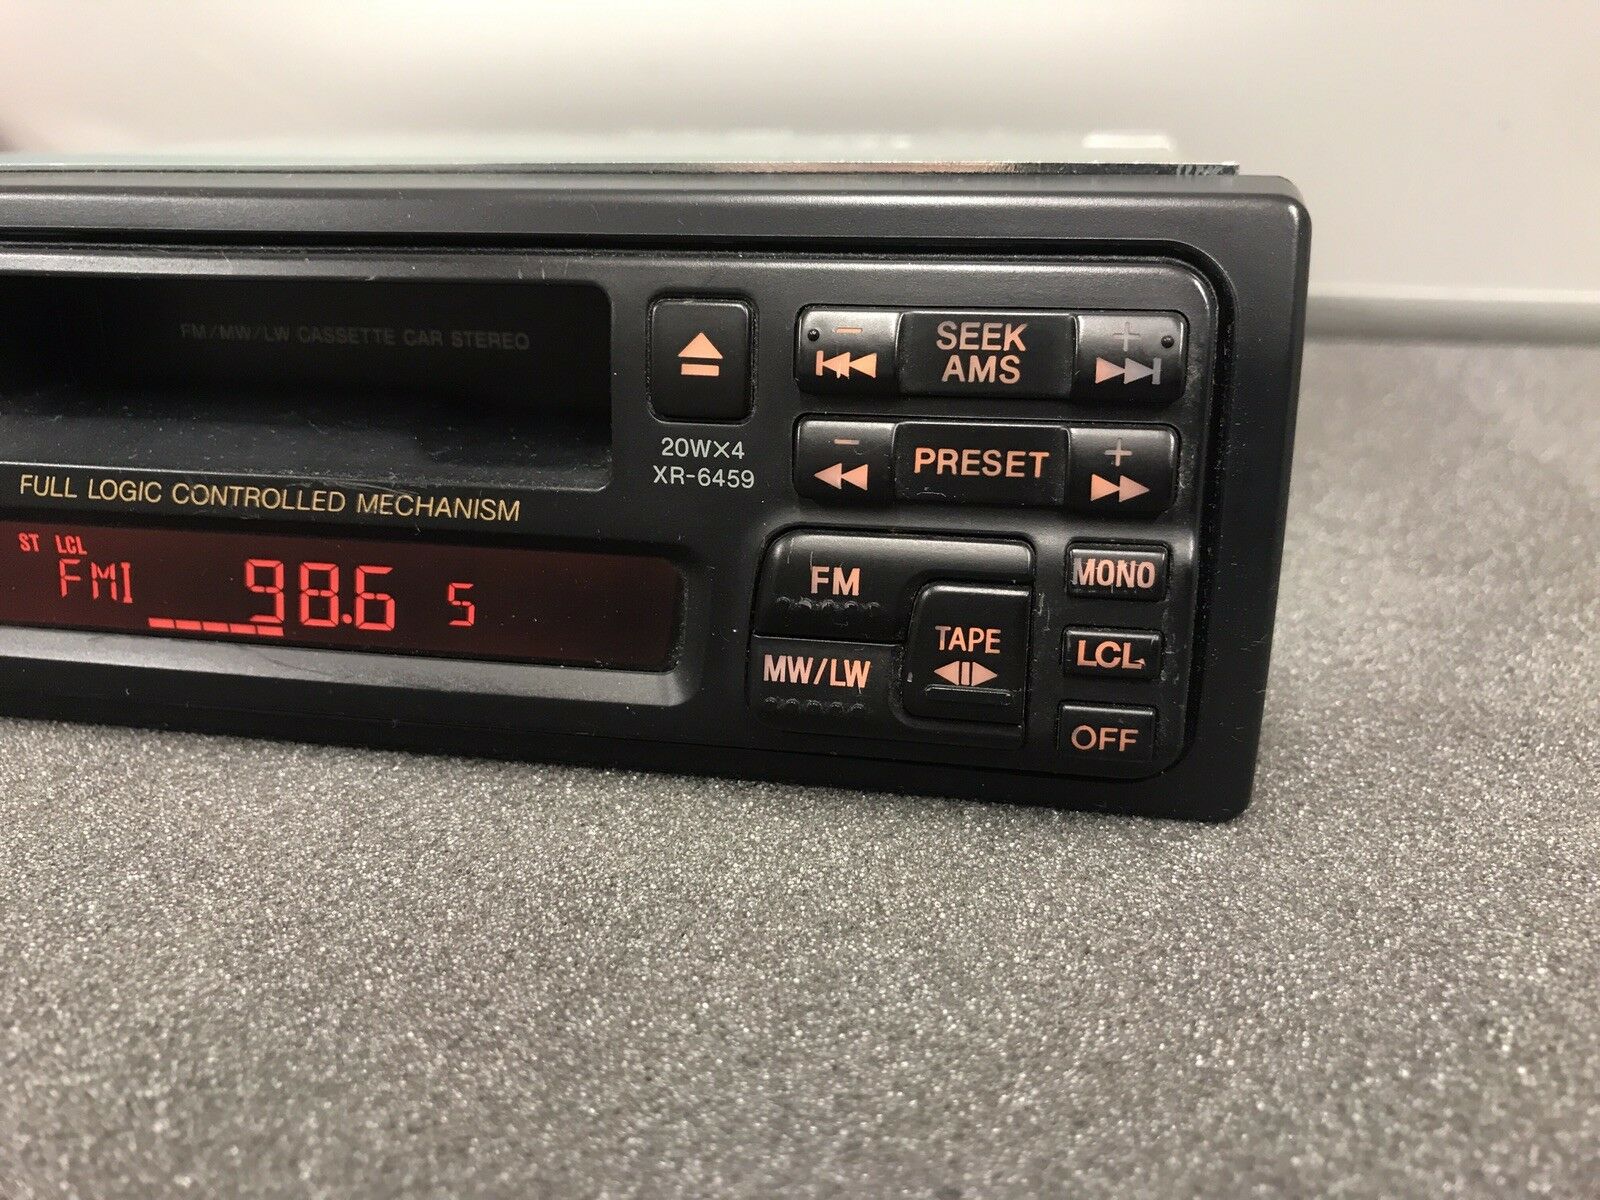 Old Sony Car Radio Stereo Cassette Player Model Xr-6459 Retro 90s Vintage Retro